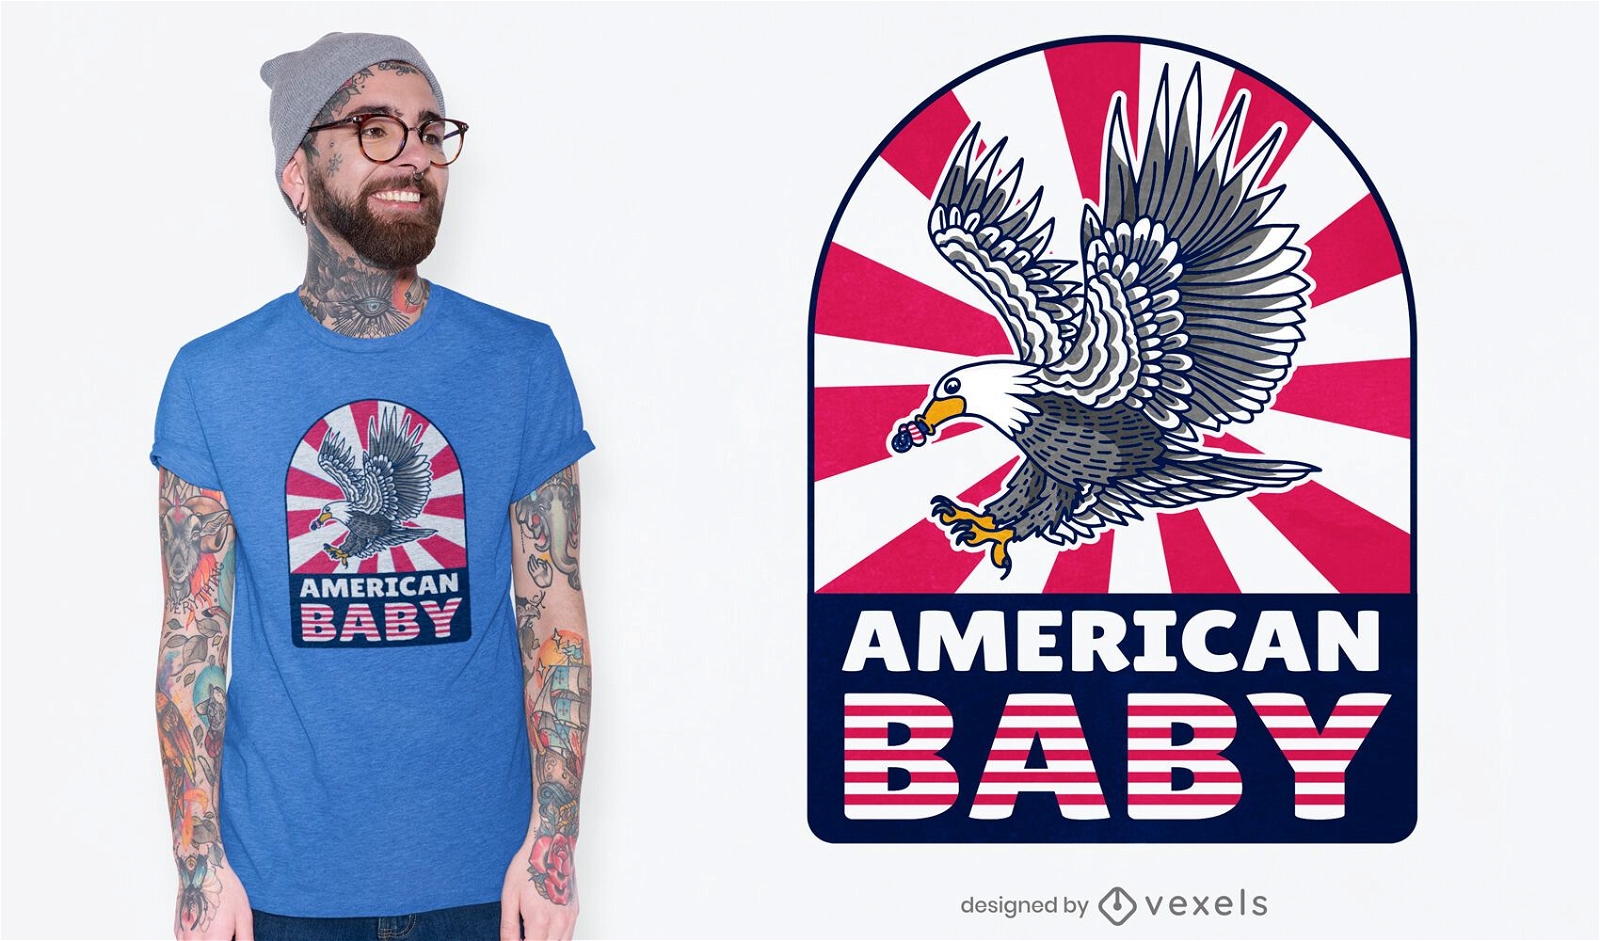 American baby t-shirt design